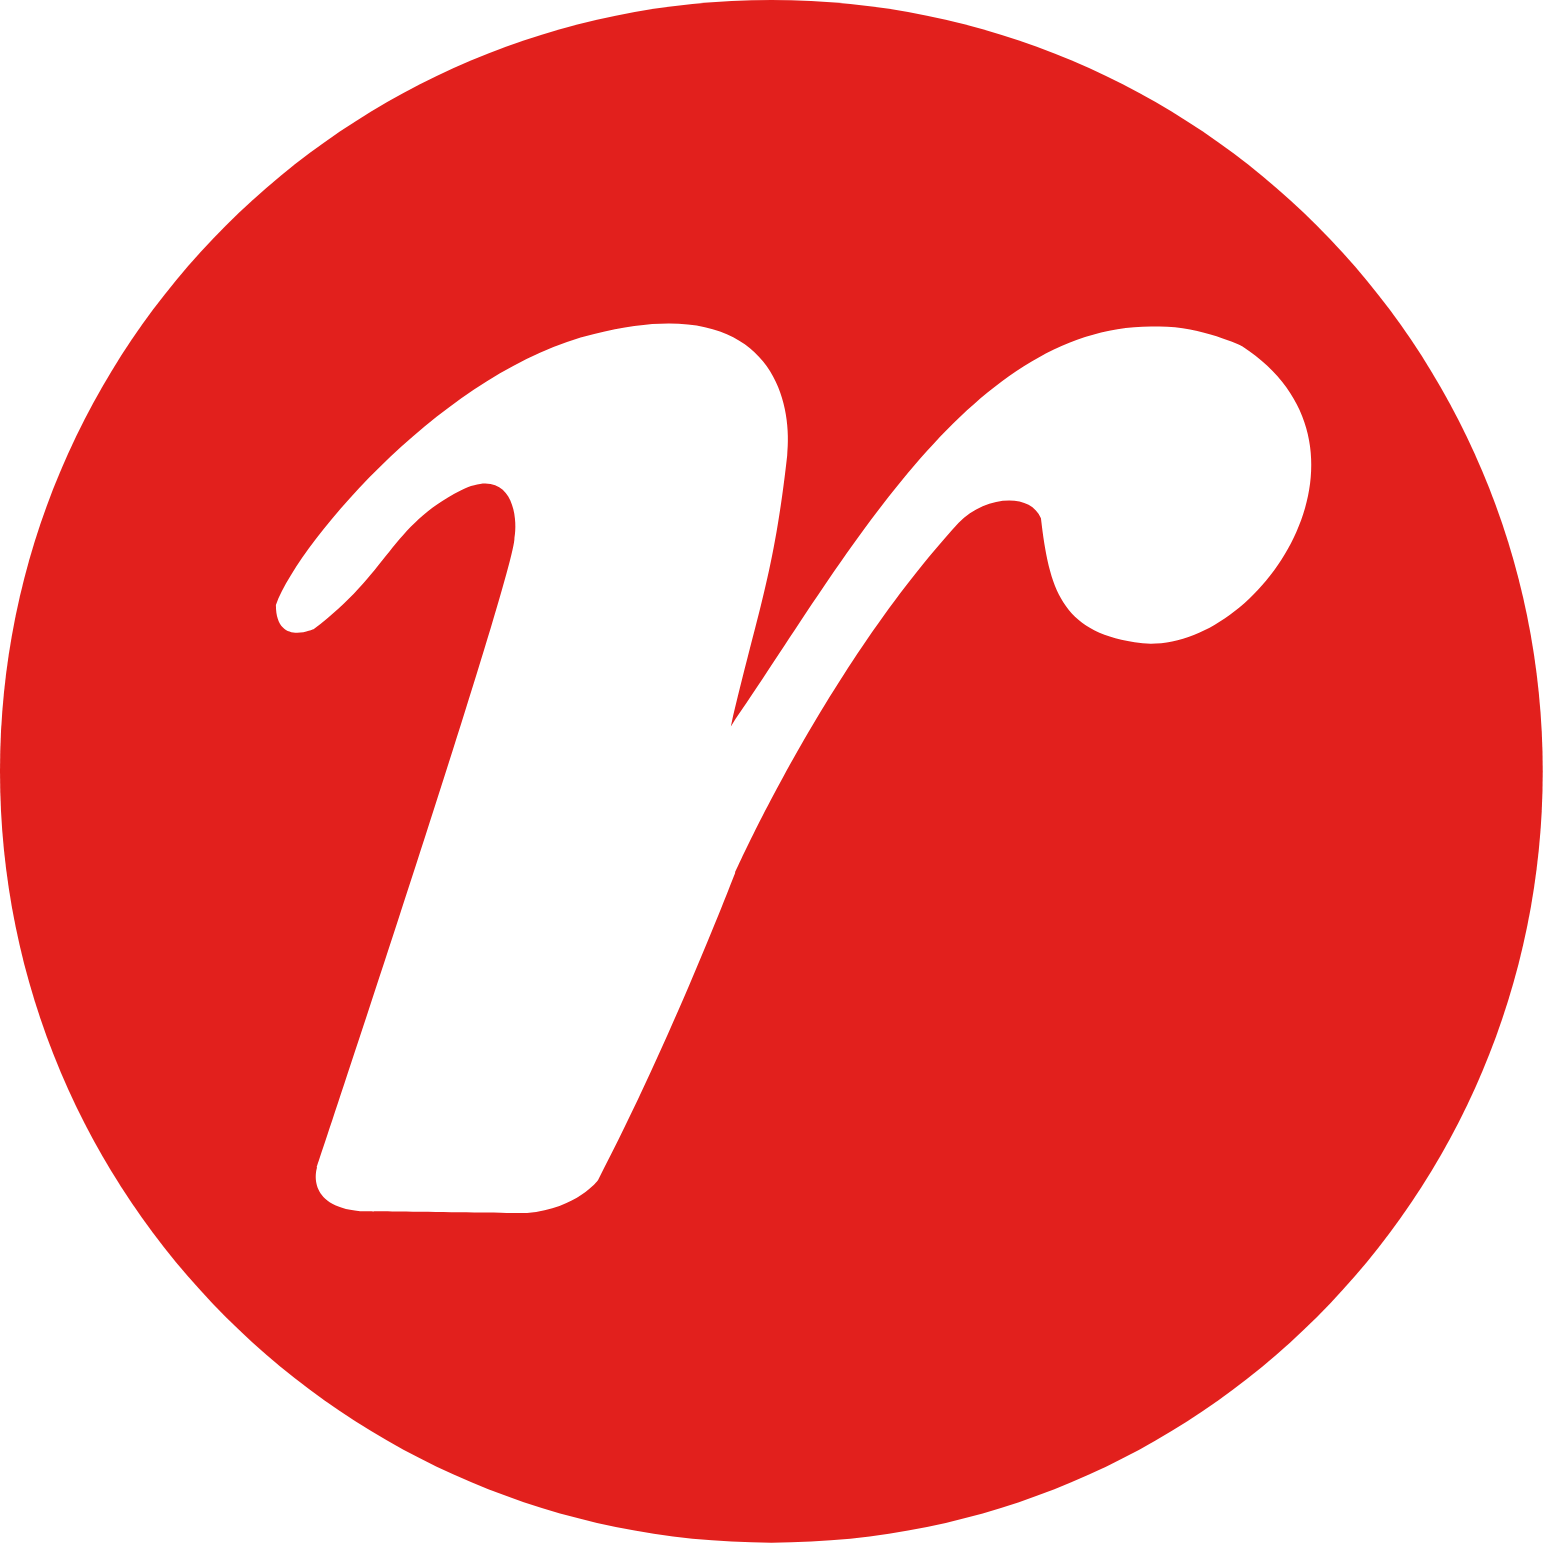 Lojas Renner logo (PNG transparent)